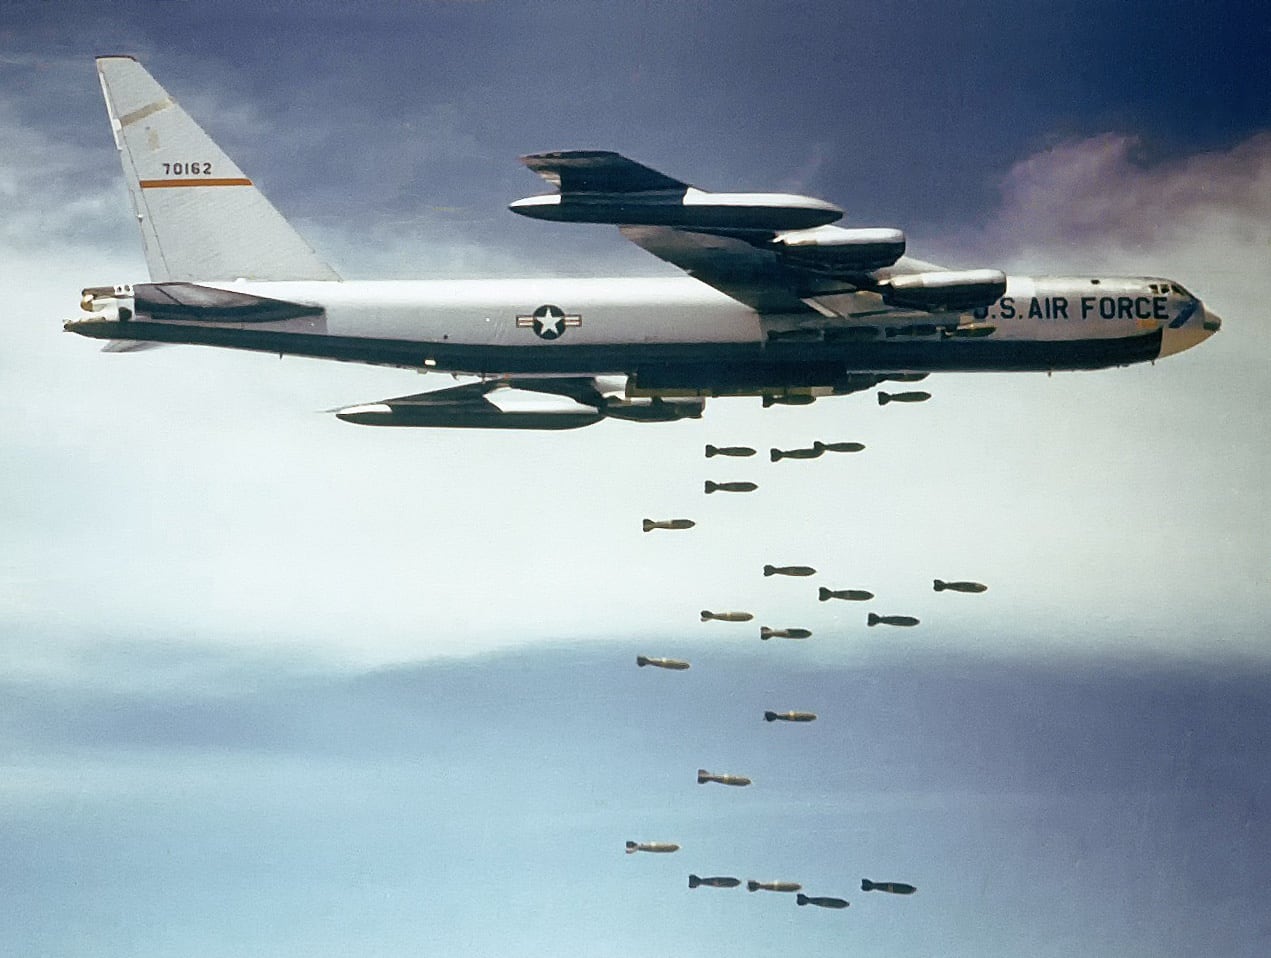 B-52 dropping heavy ordinance in Vietnam.